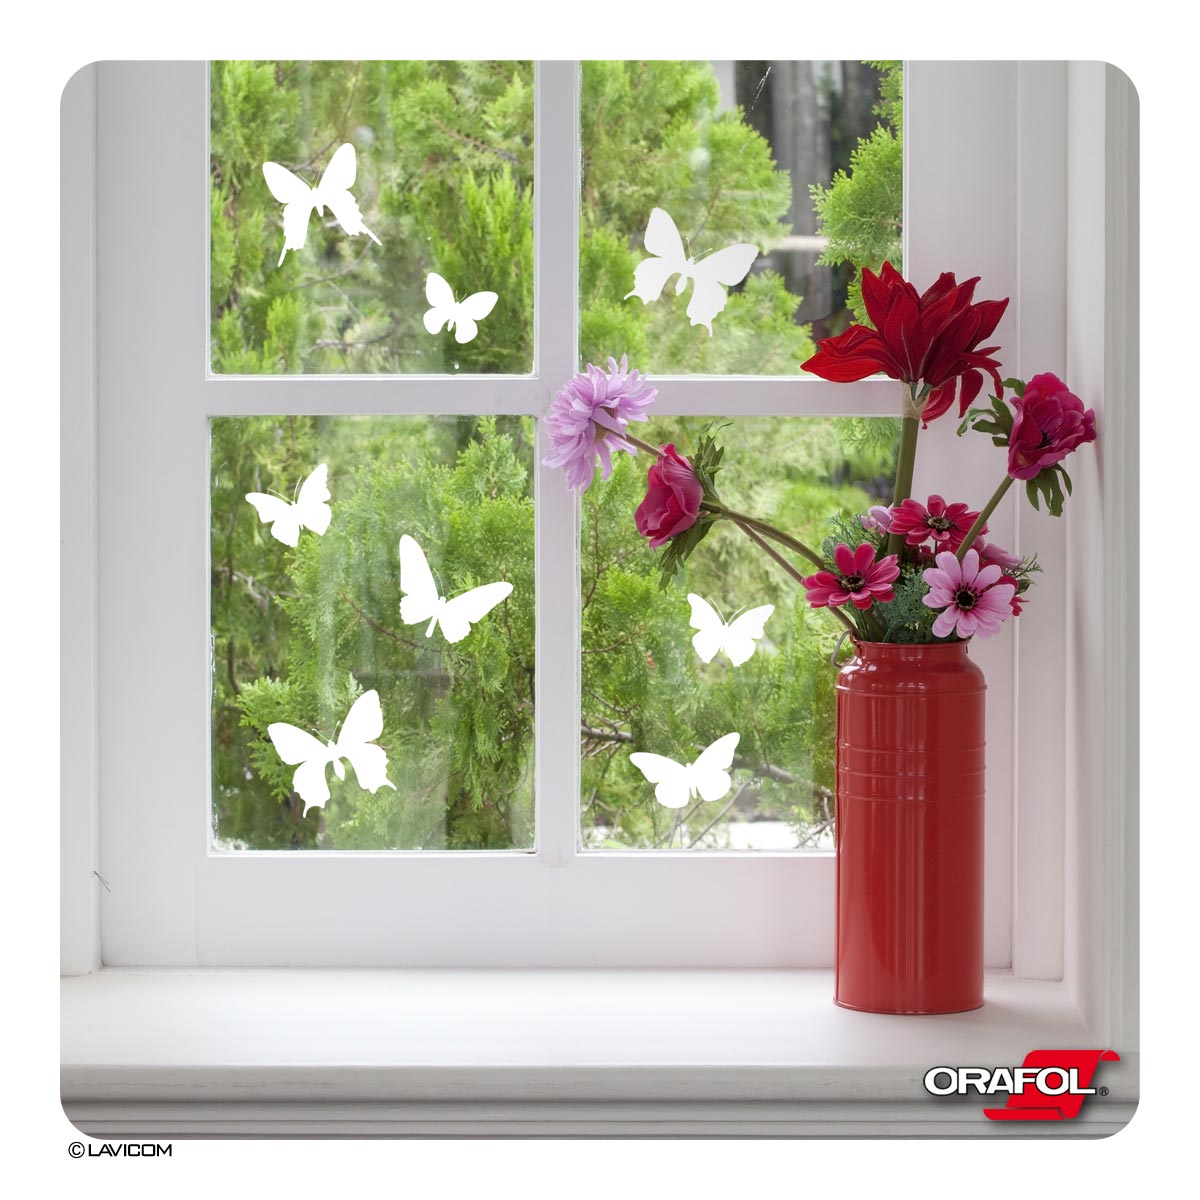 Fenstersticker Fensterdeko Schmetterlinge Butterfly in verschiedenen Grössen 